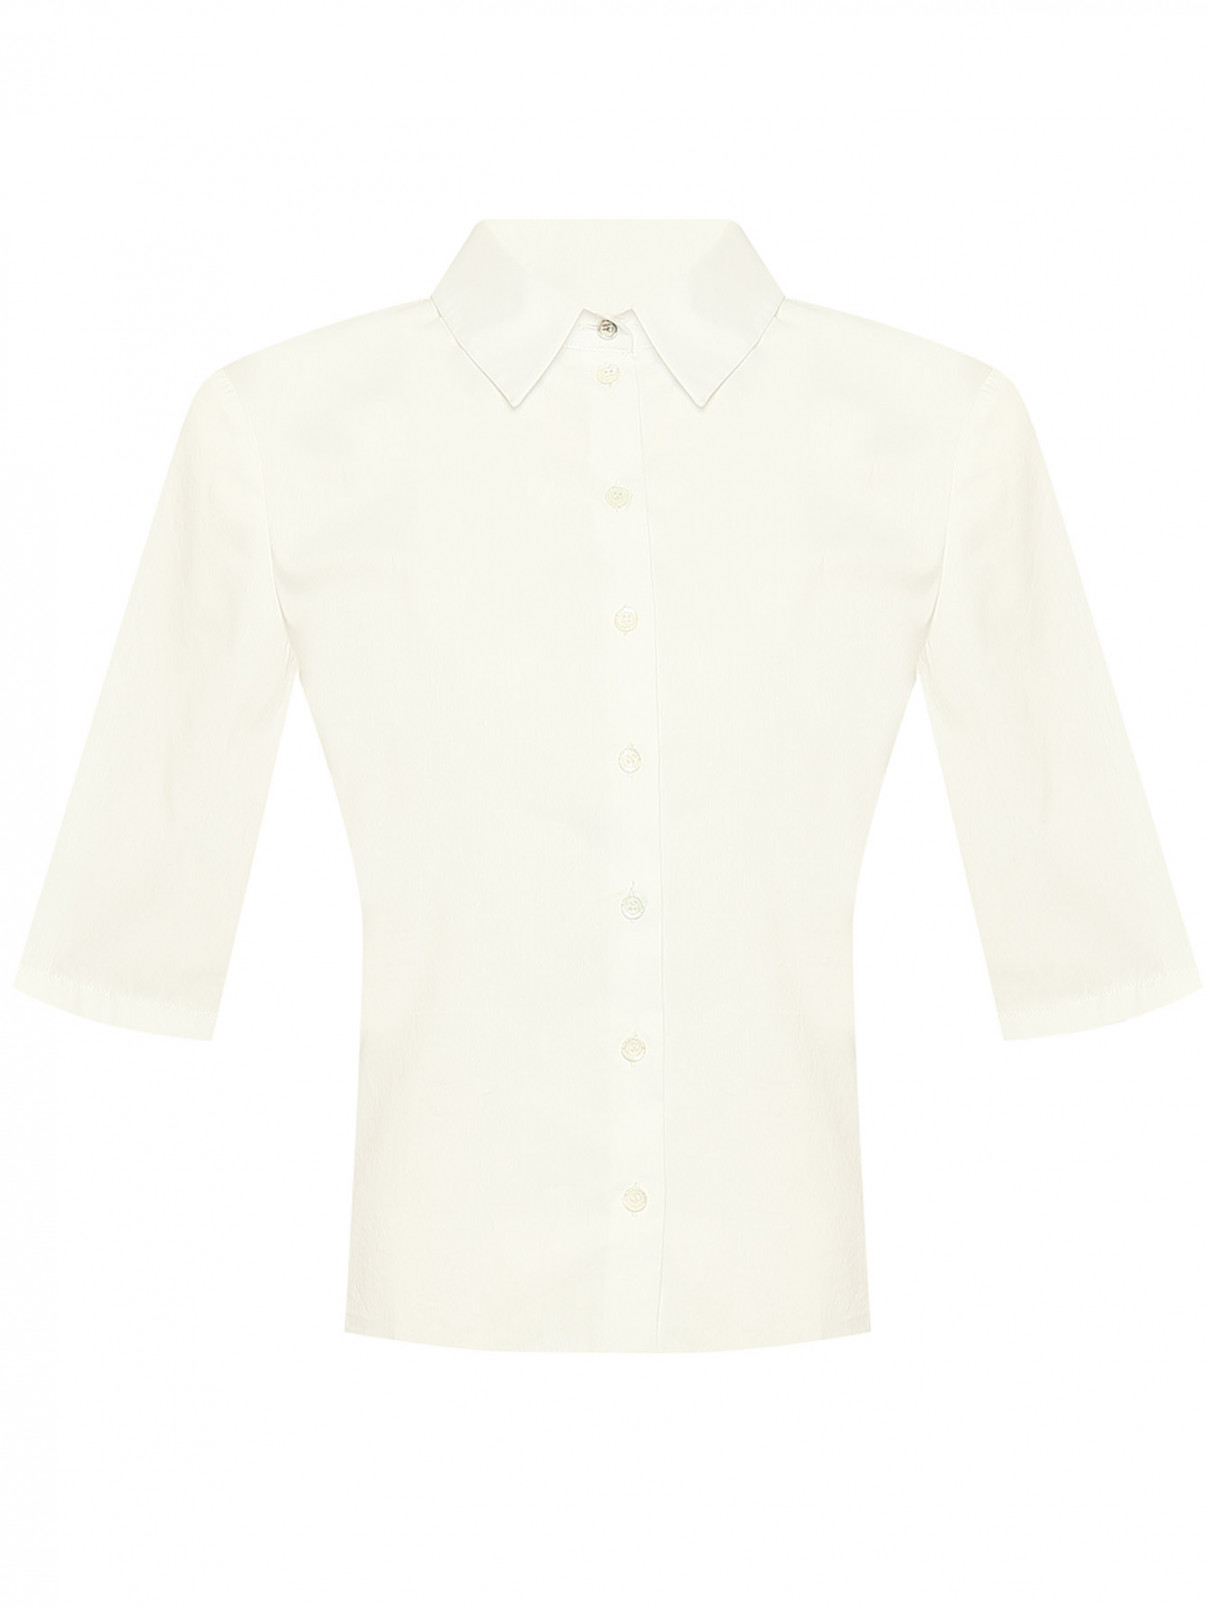 Однотонная рубашка с коротким рукавом Patrizia Pepe  –  Общий вид  – Цвет:  Белый